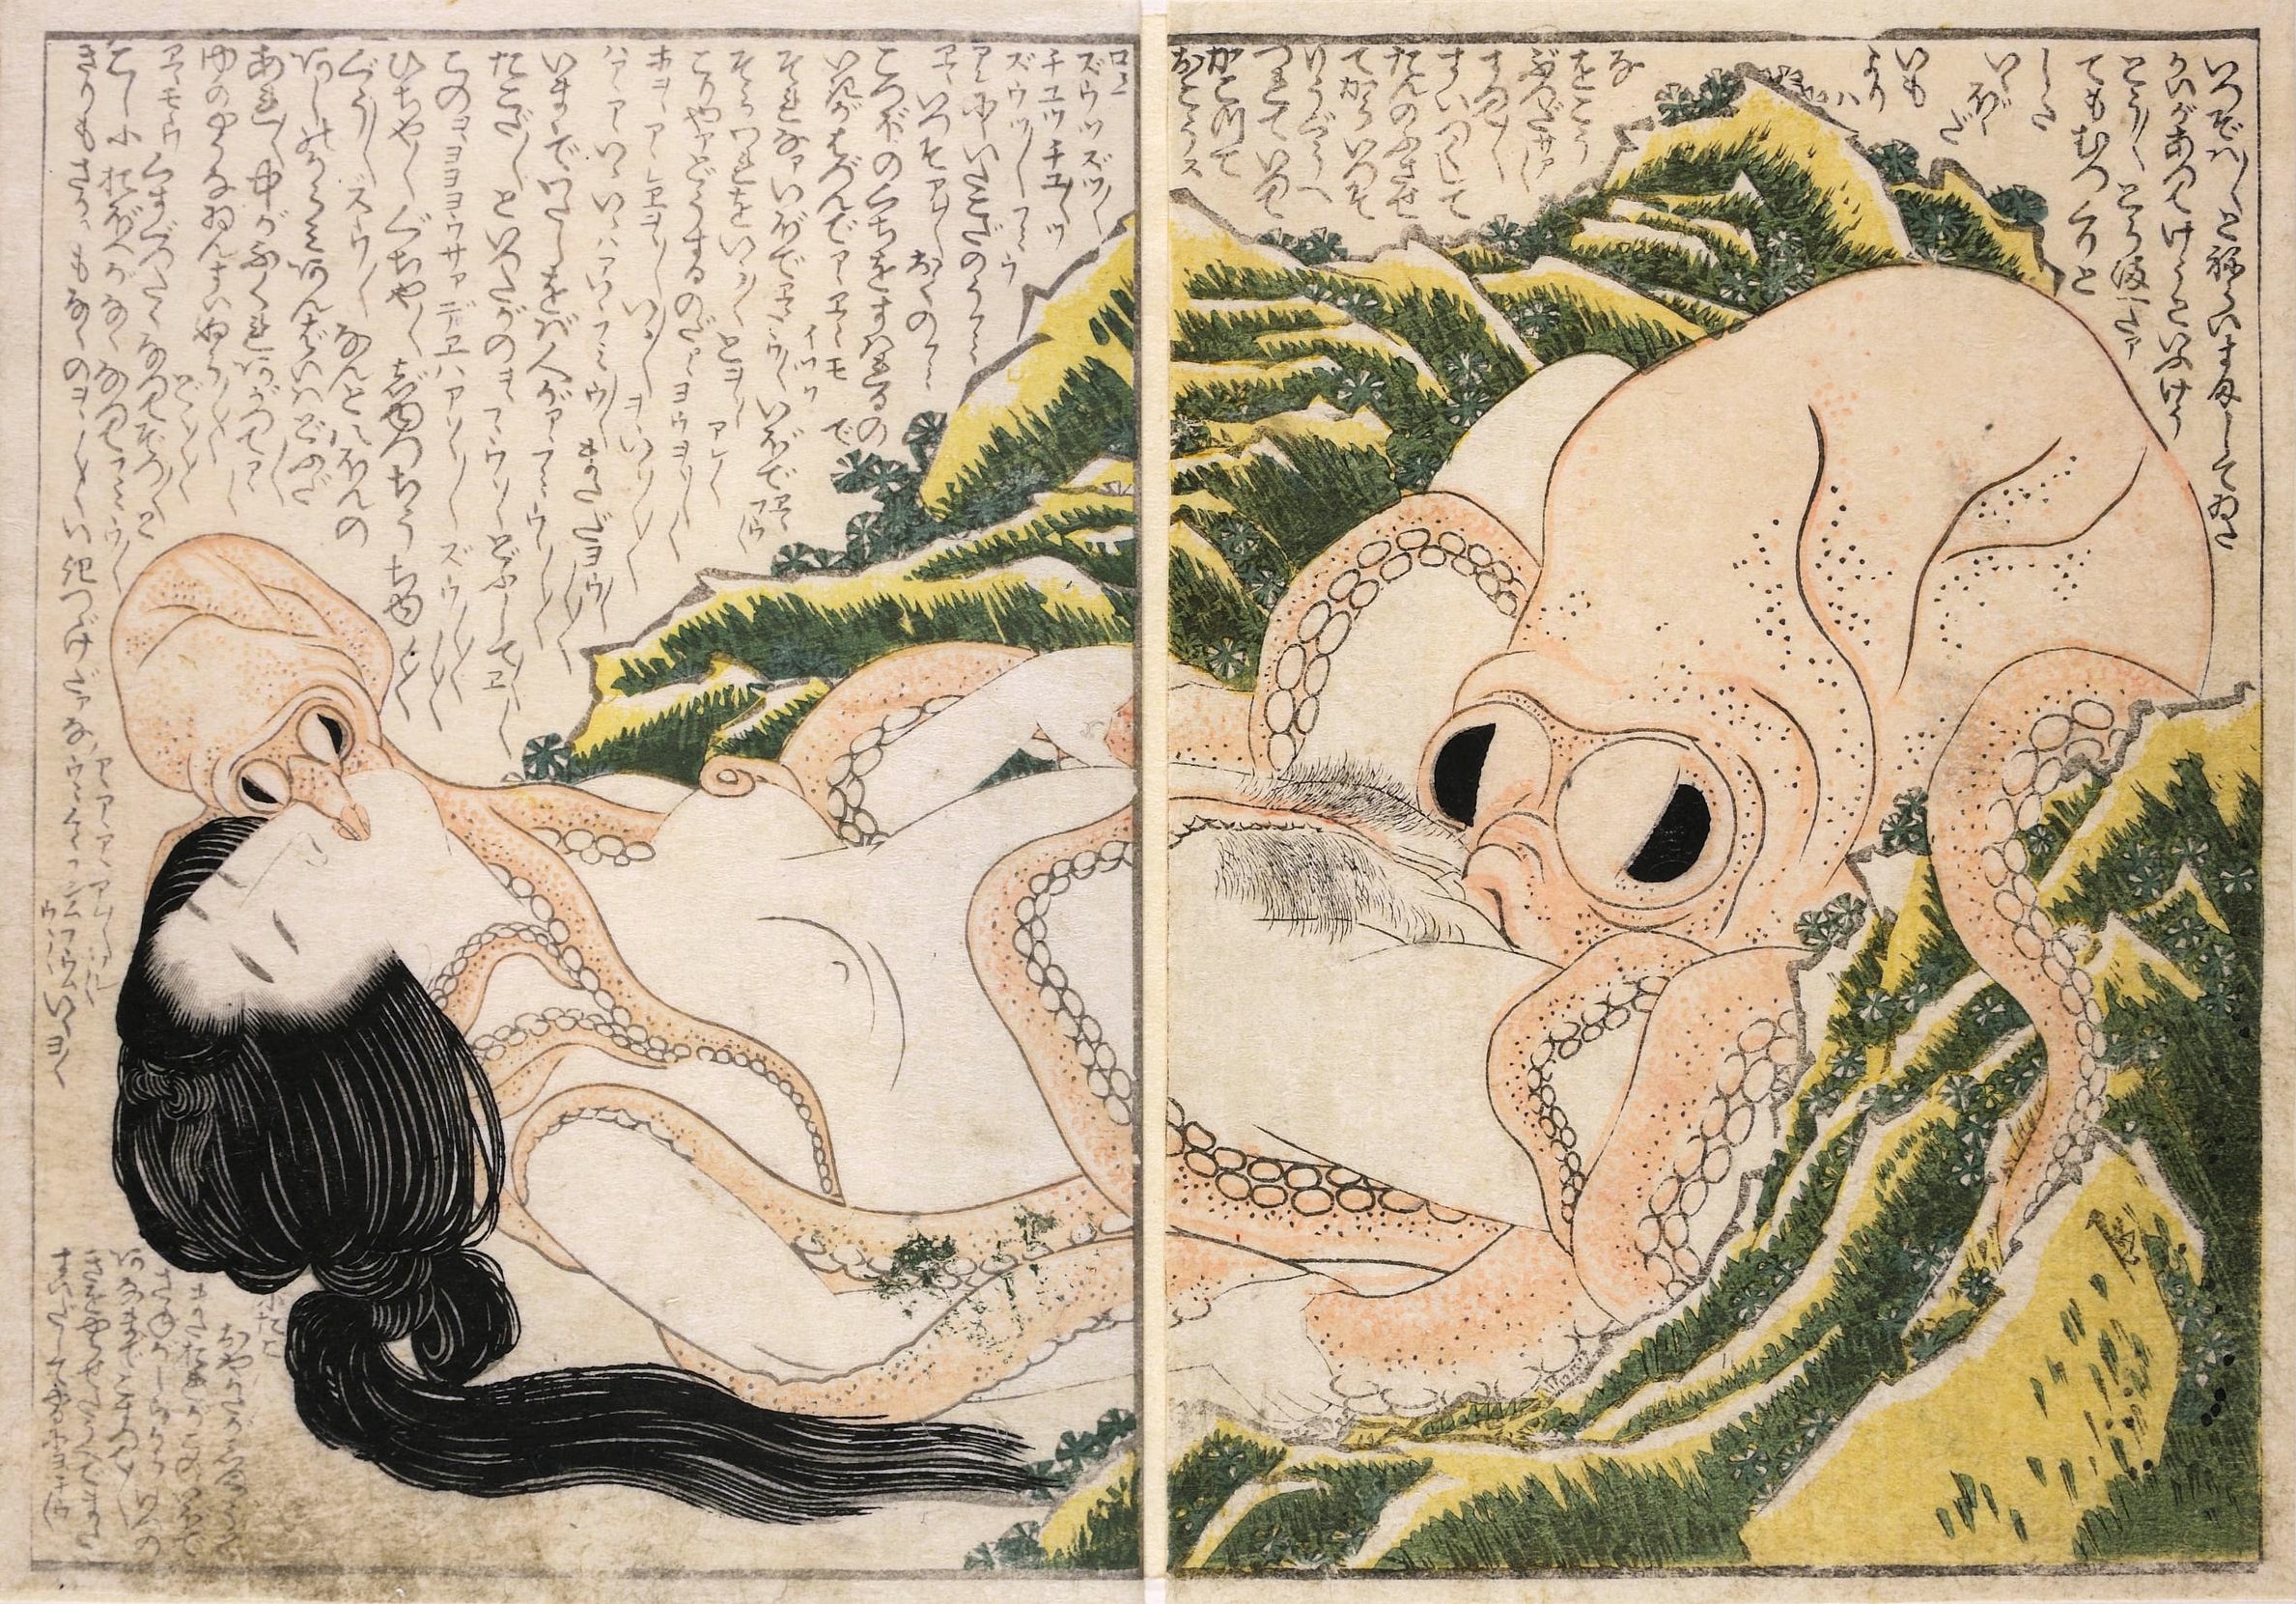 The Dream of the Fishermans Wife by Katsushika Hokusai